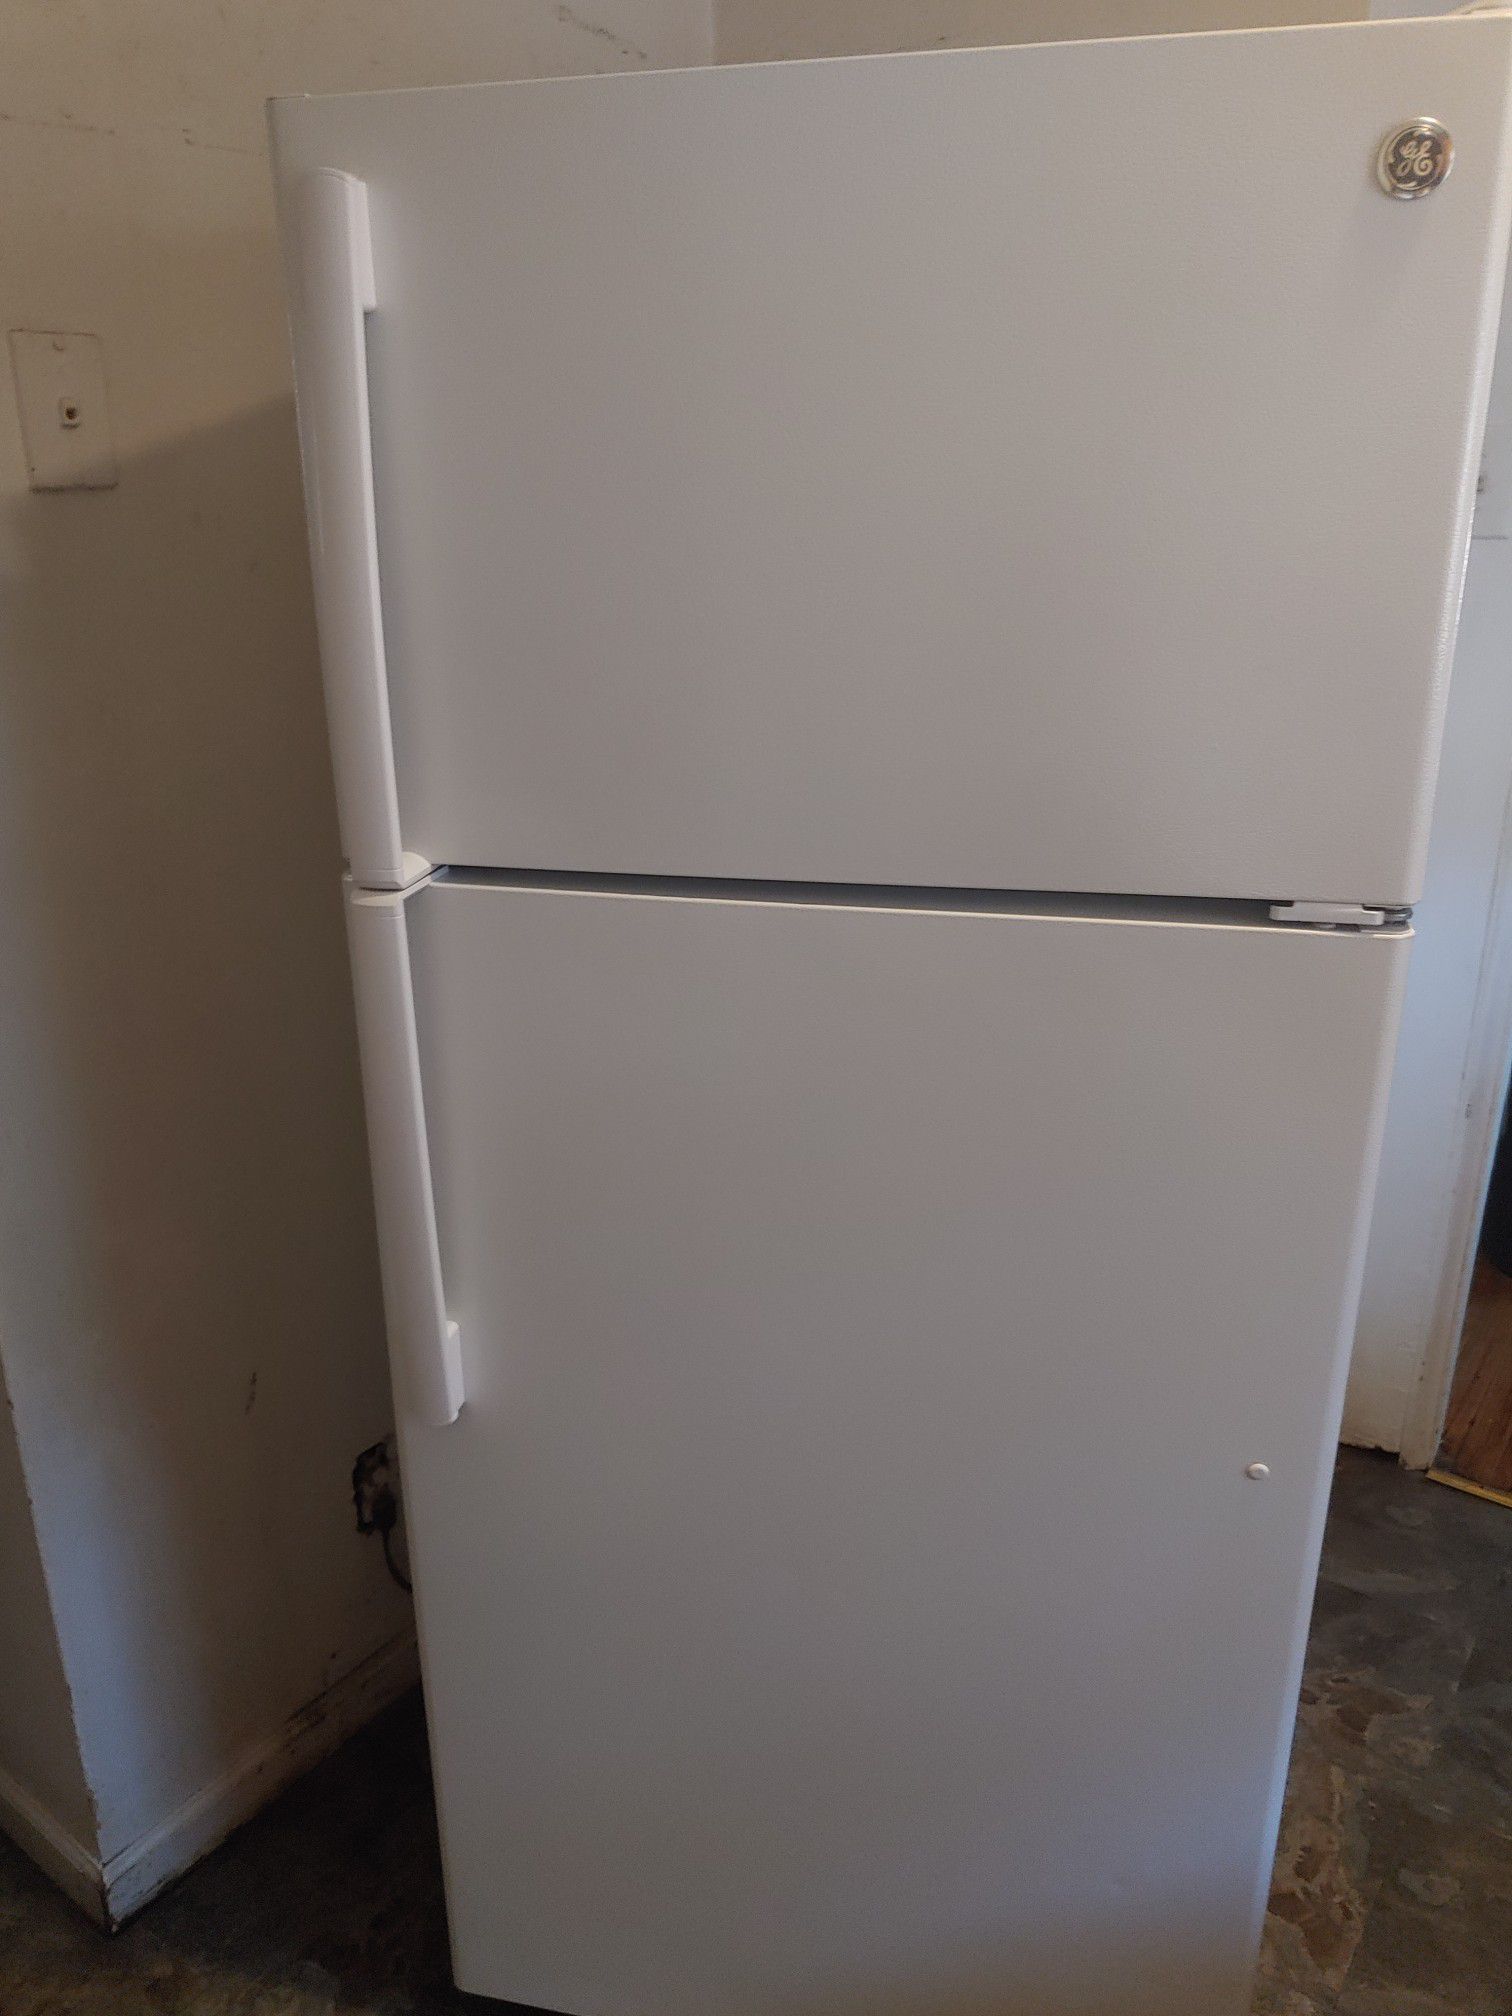 17cft GE refrigerator $425.00